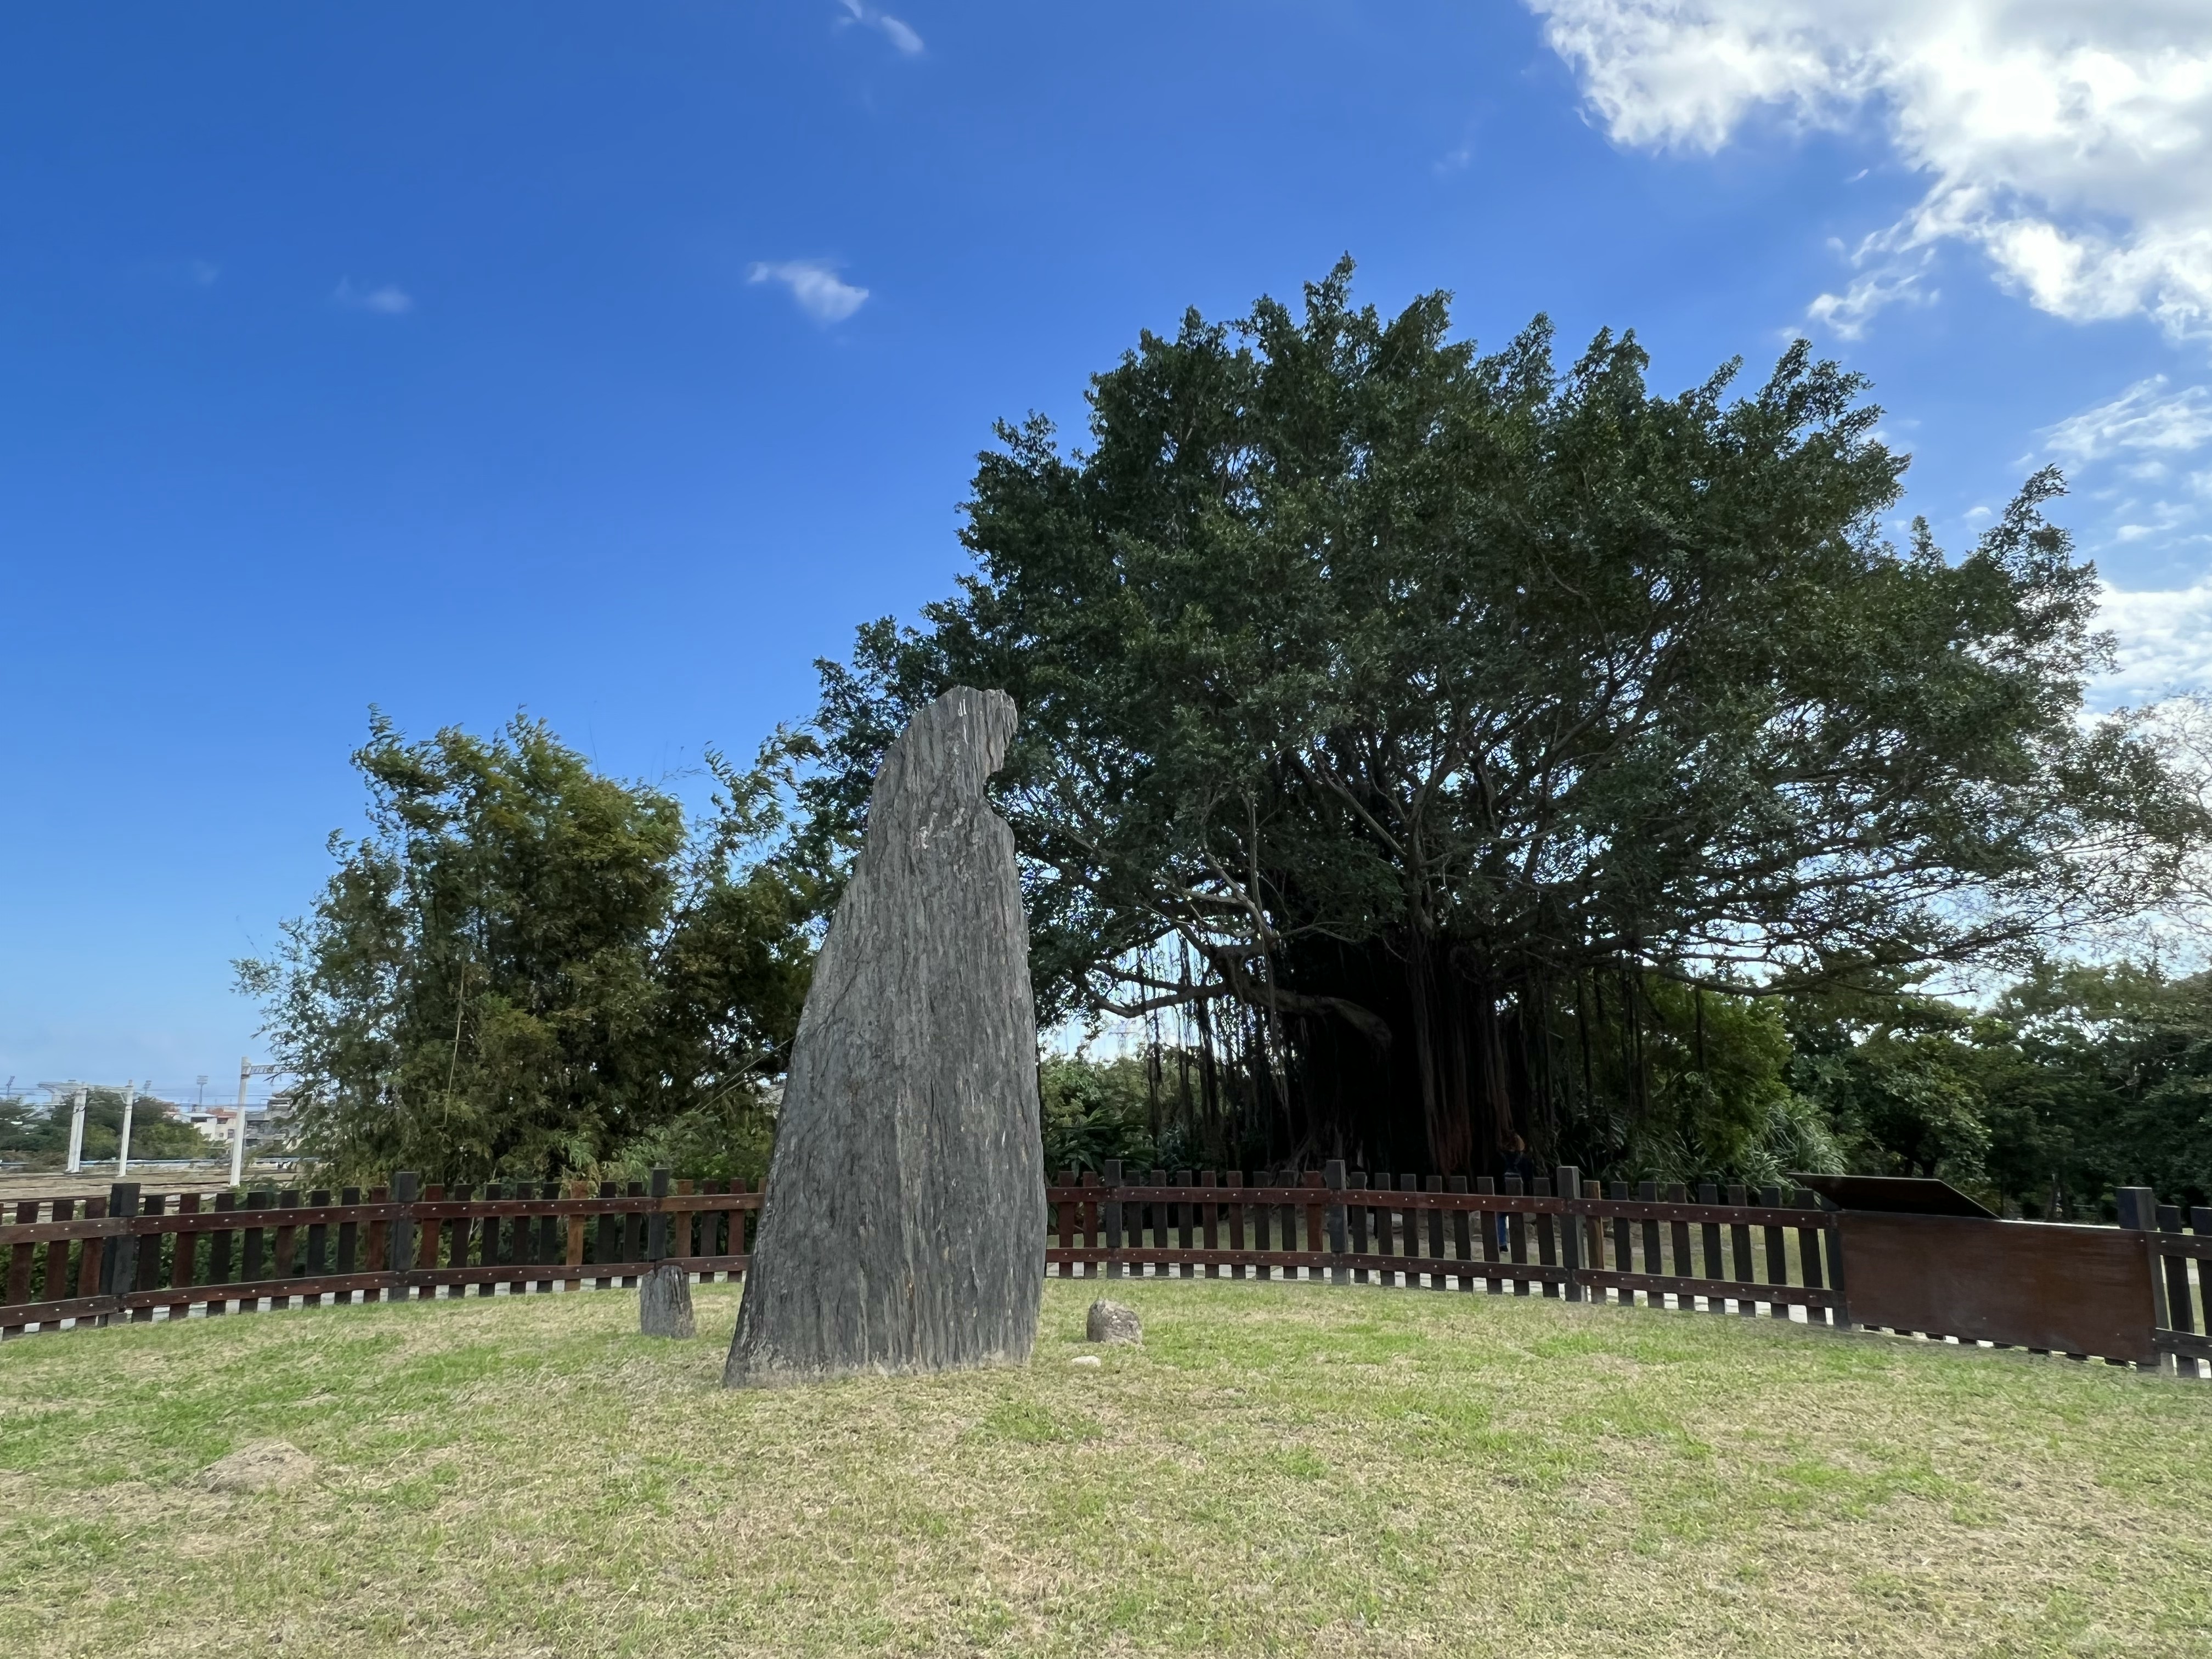 Moon-shaped stone pillar